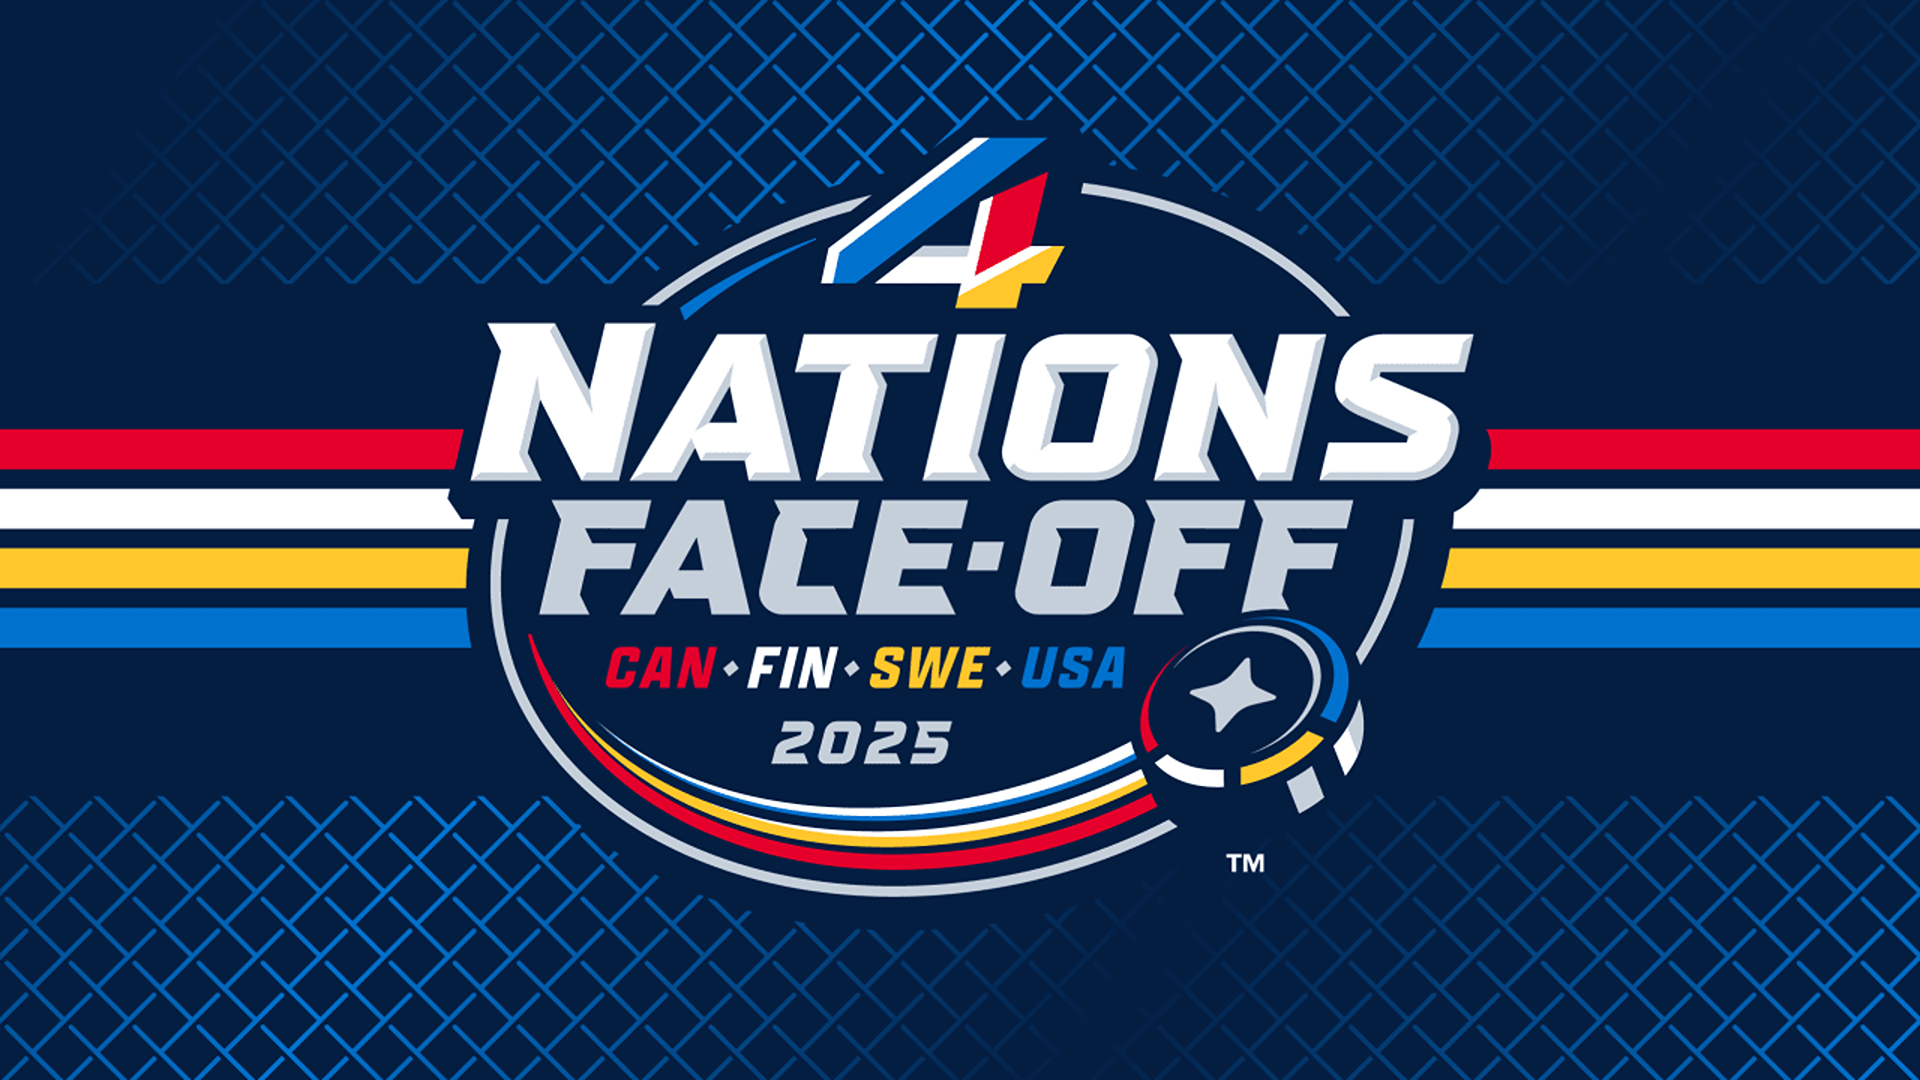 4 Nations Face-Off: Ανακοινώθηκαν τα πρώτα 6 ονόματα για ΗΠΑ και Καναδά